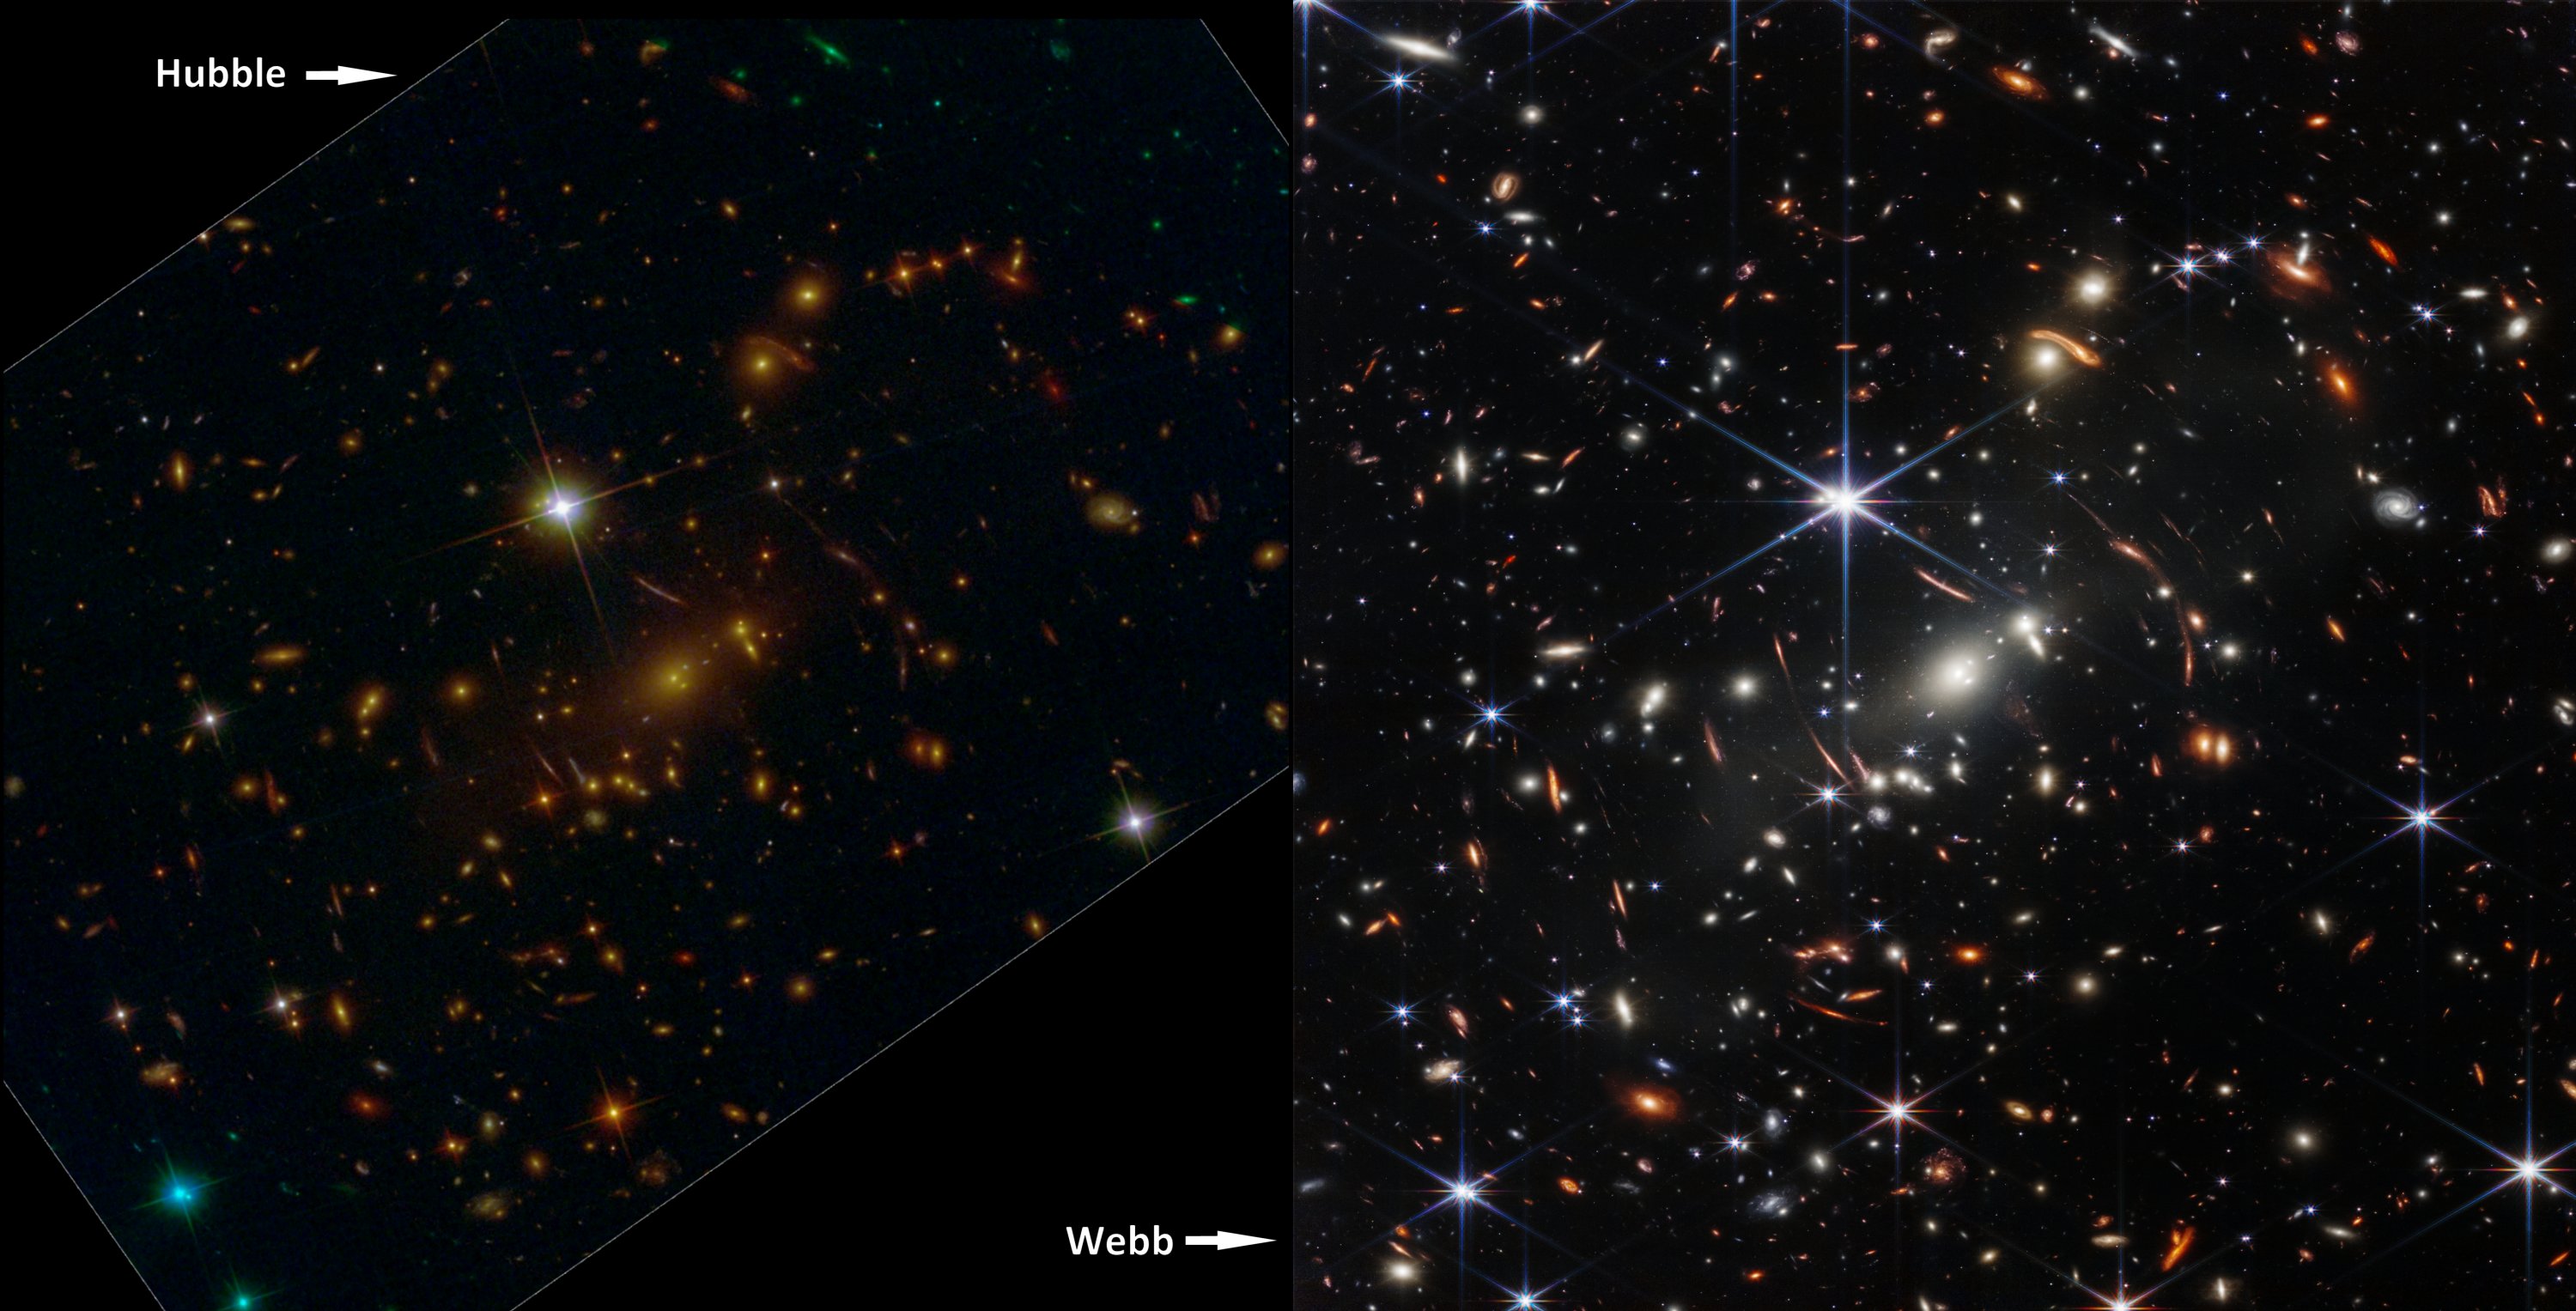 SMACS 0723 Hubble v Webb SM.jpg